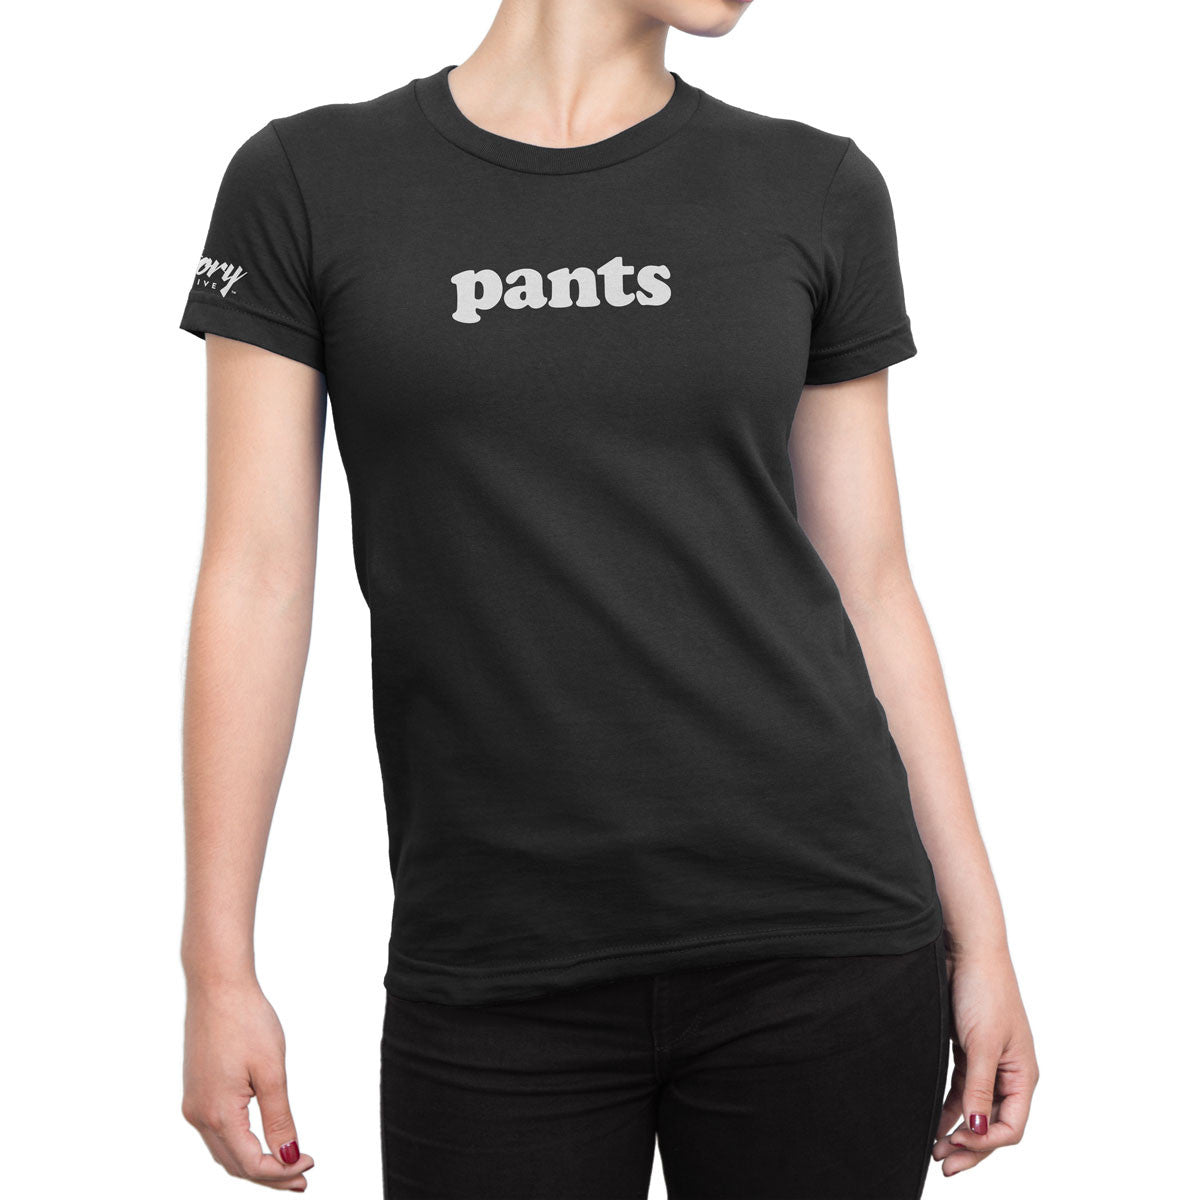 Pants — Women's T-Shirt (Black)